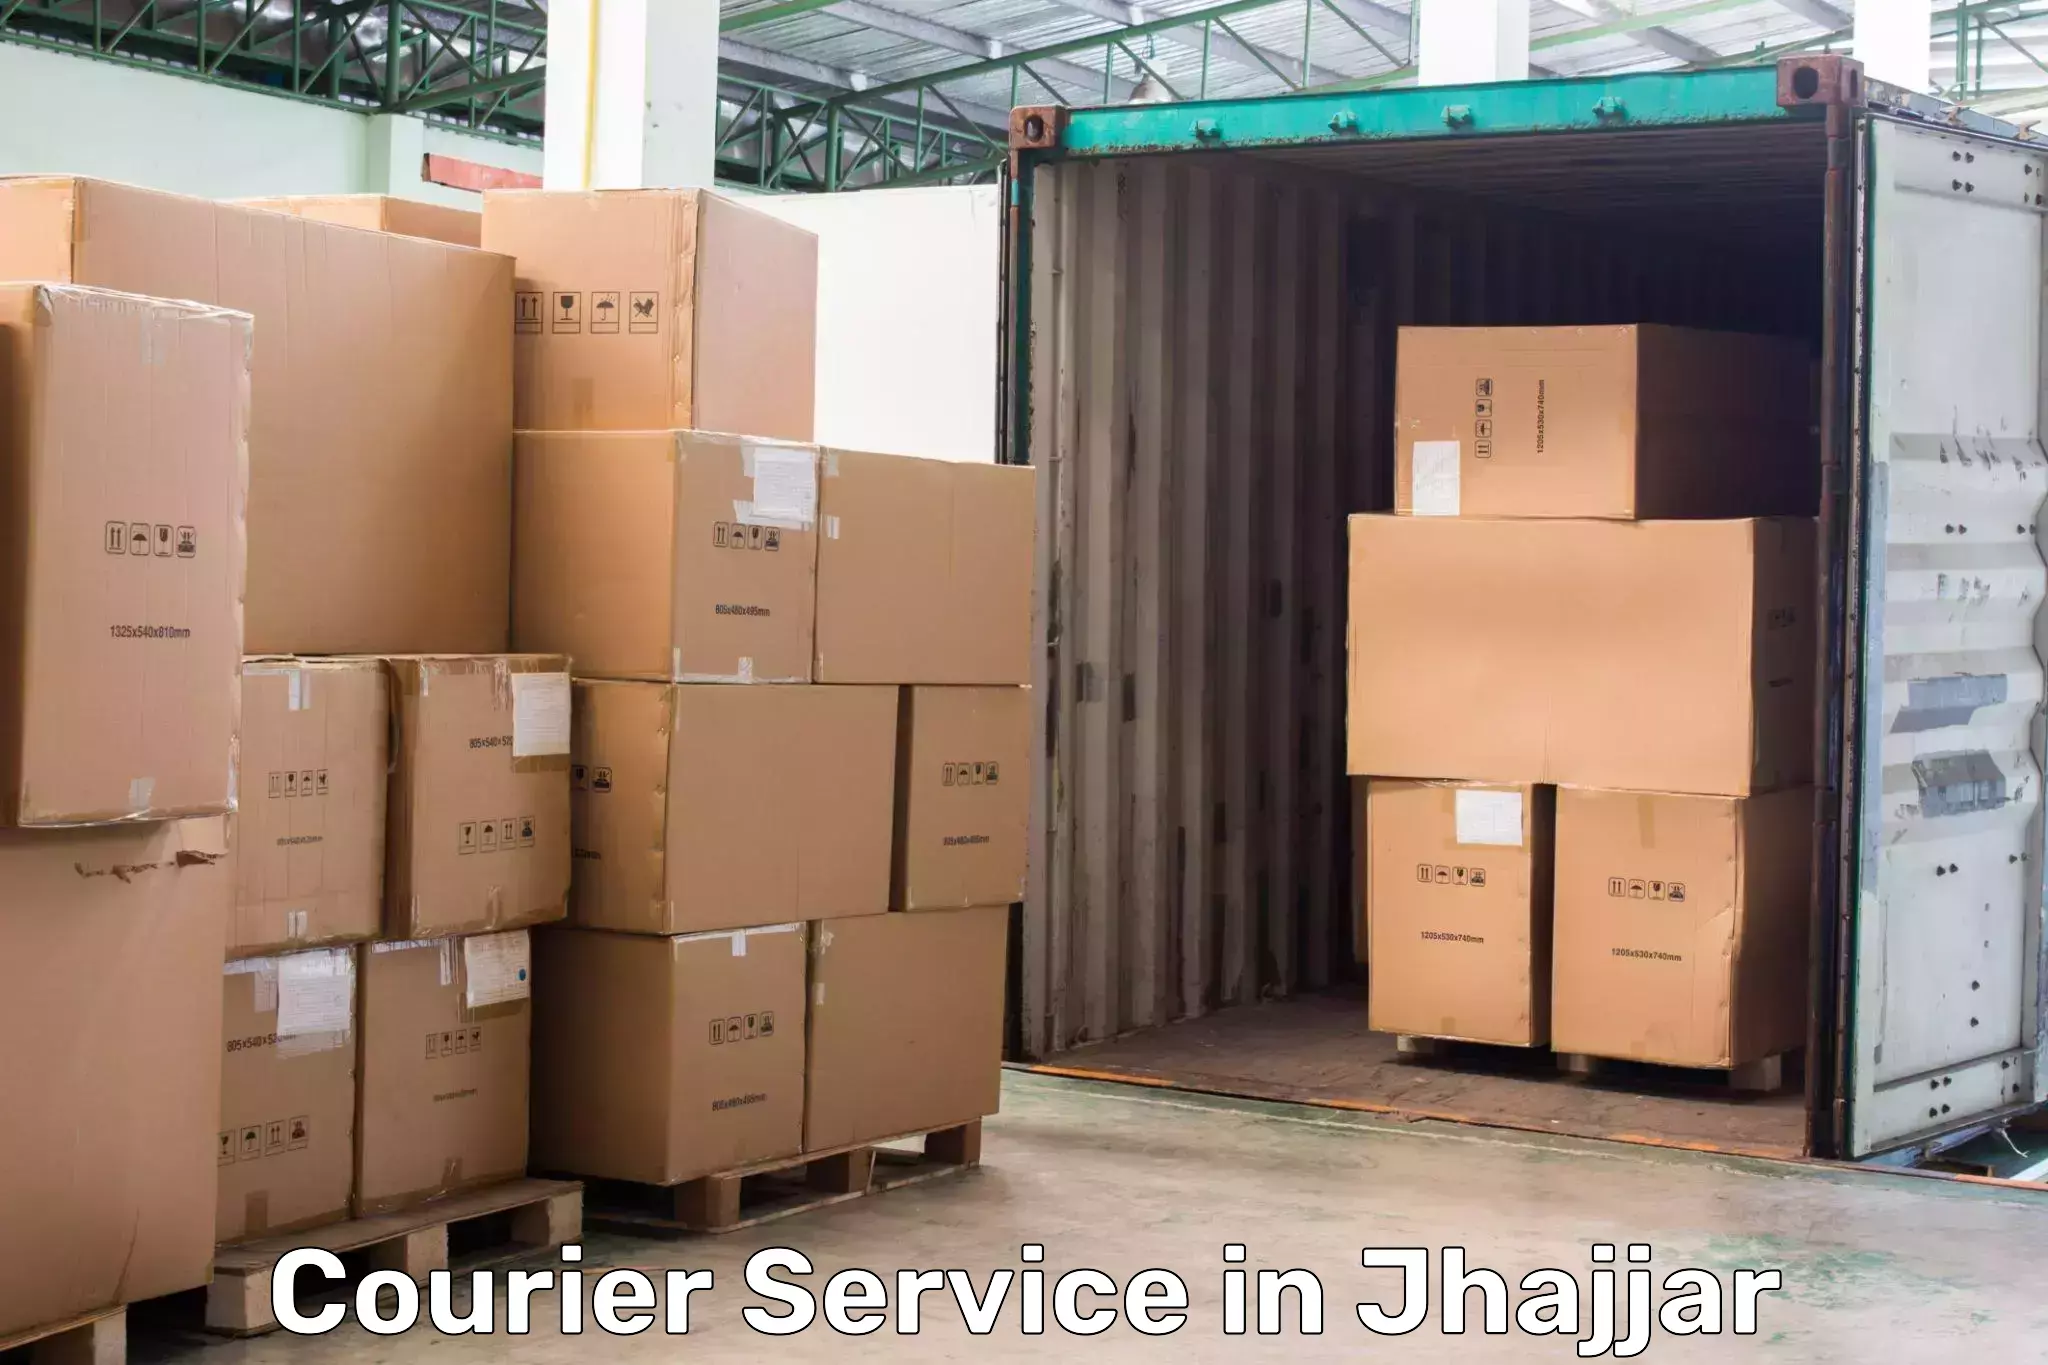 Express postal services in Jhajjar